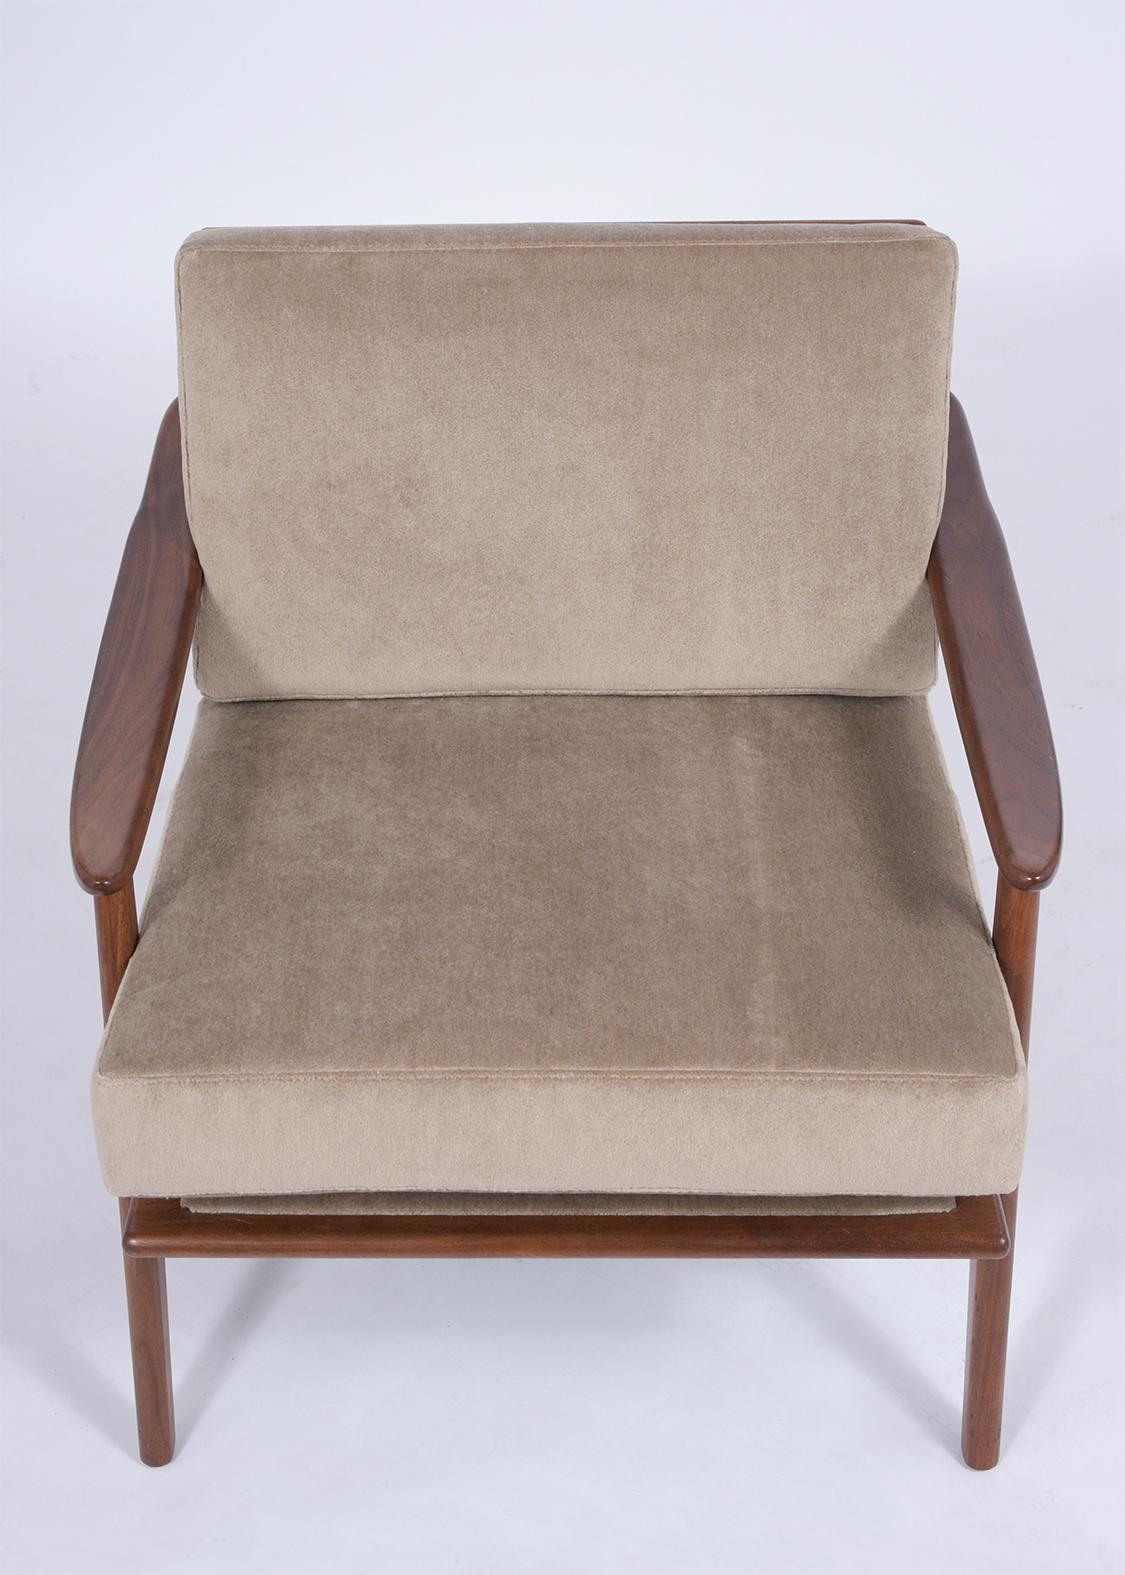 Mid-20th Century Midcentury Walnut Lounge Chair